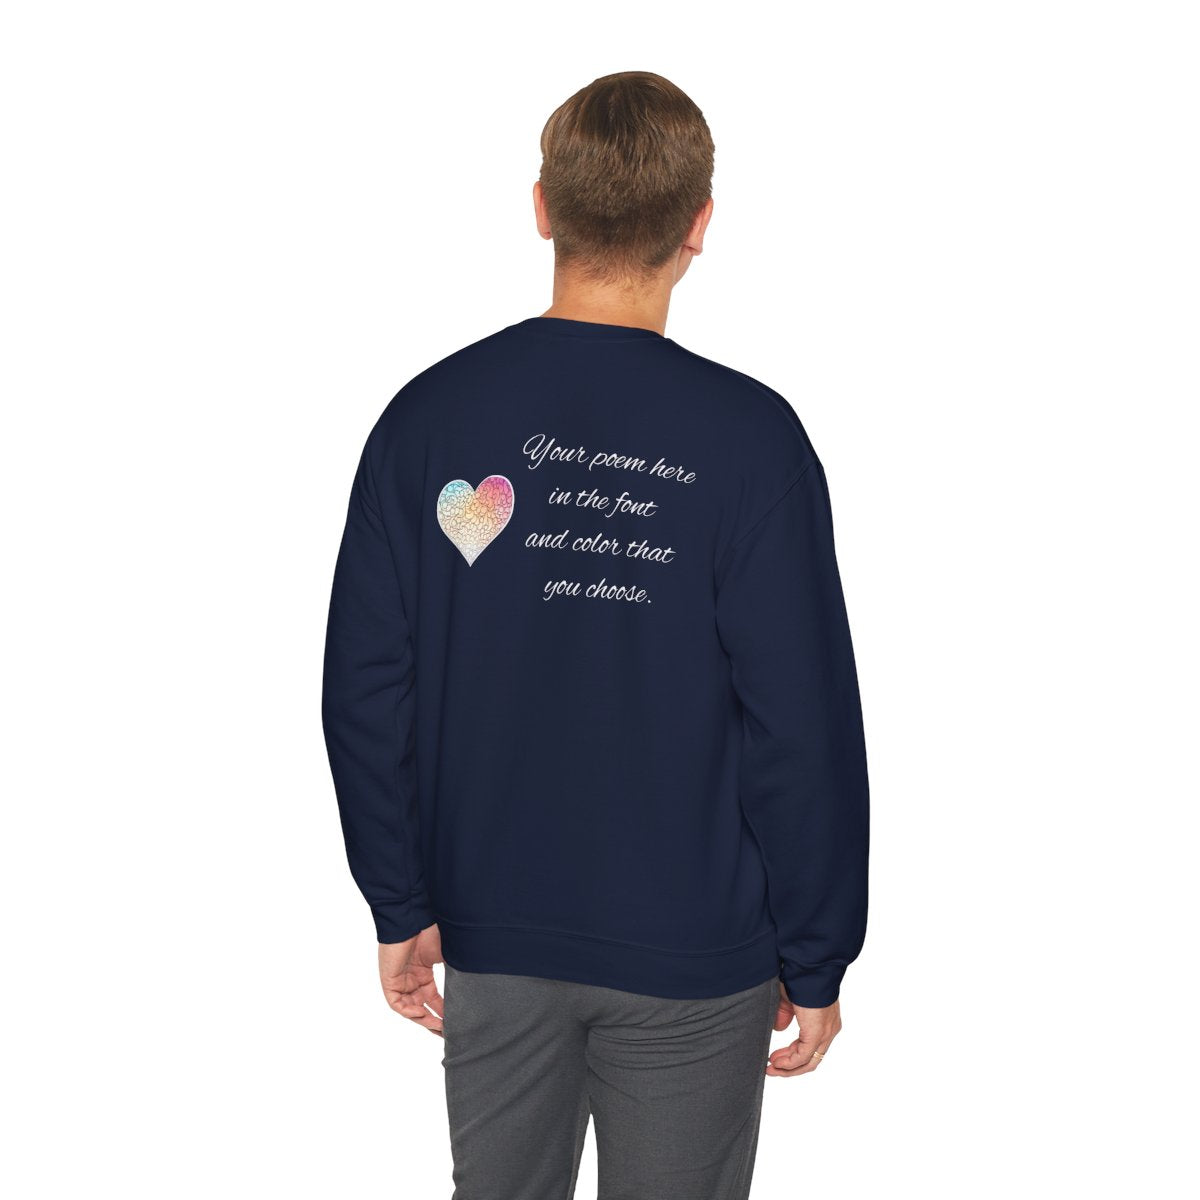 Poem On A Sweatshirt With Pattern Heart